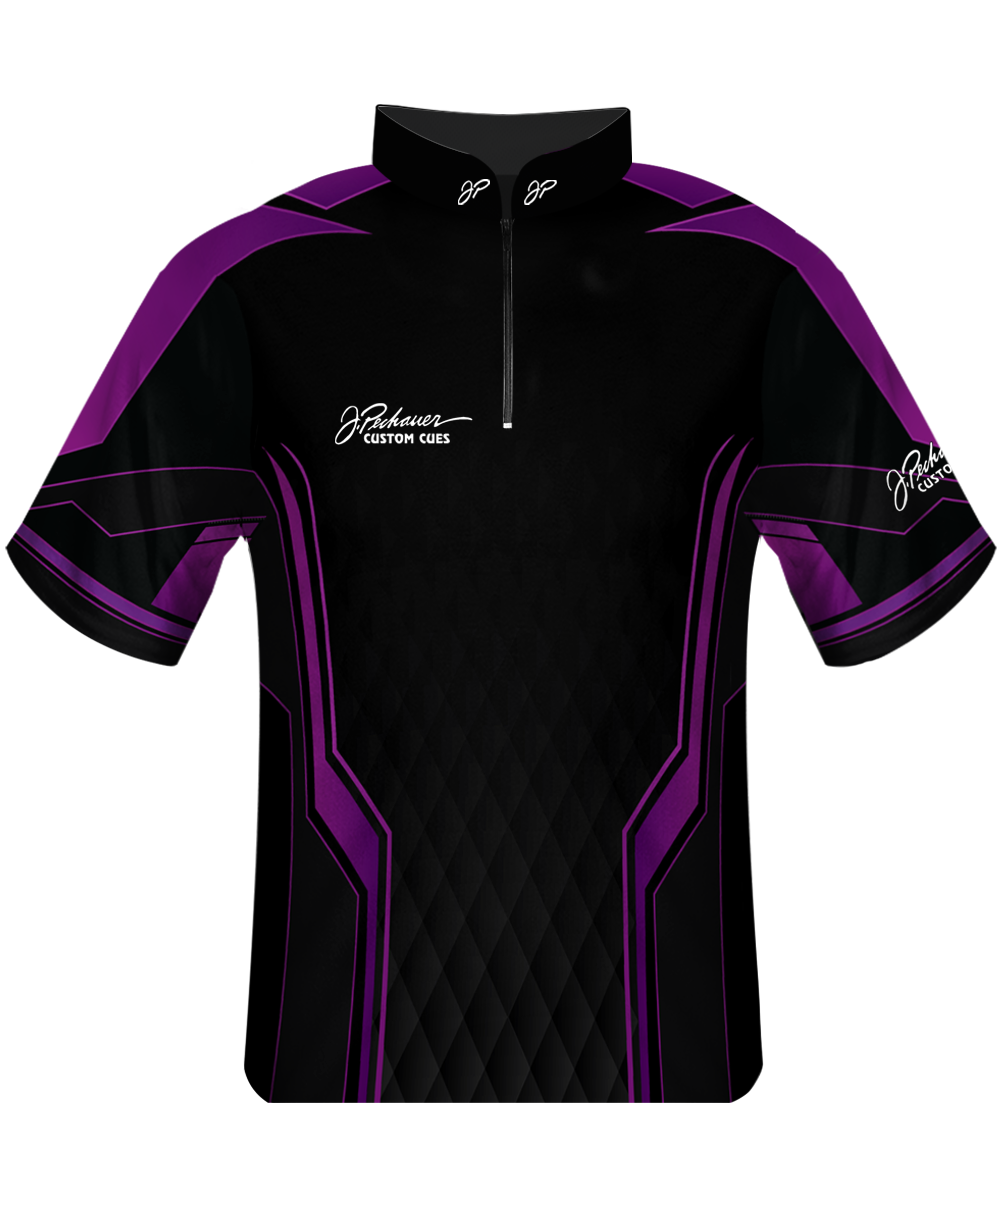 Style #7 Black/Purple Jersey